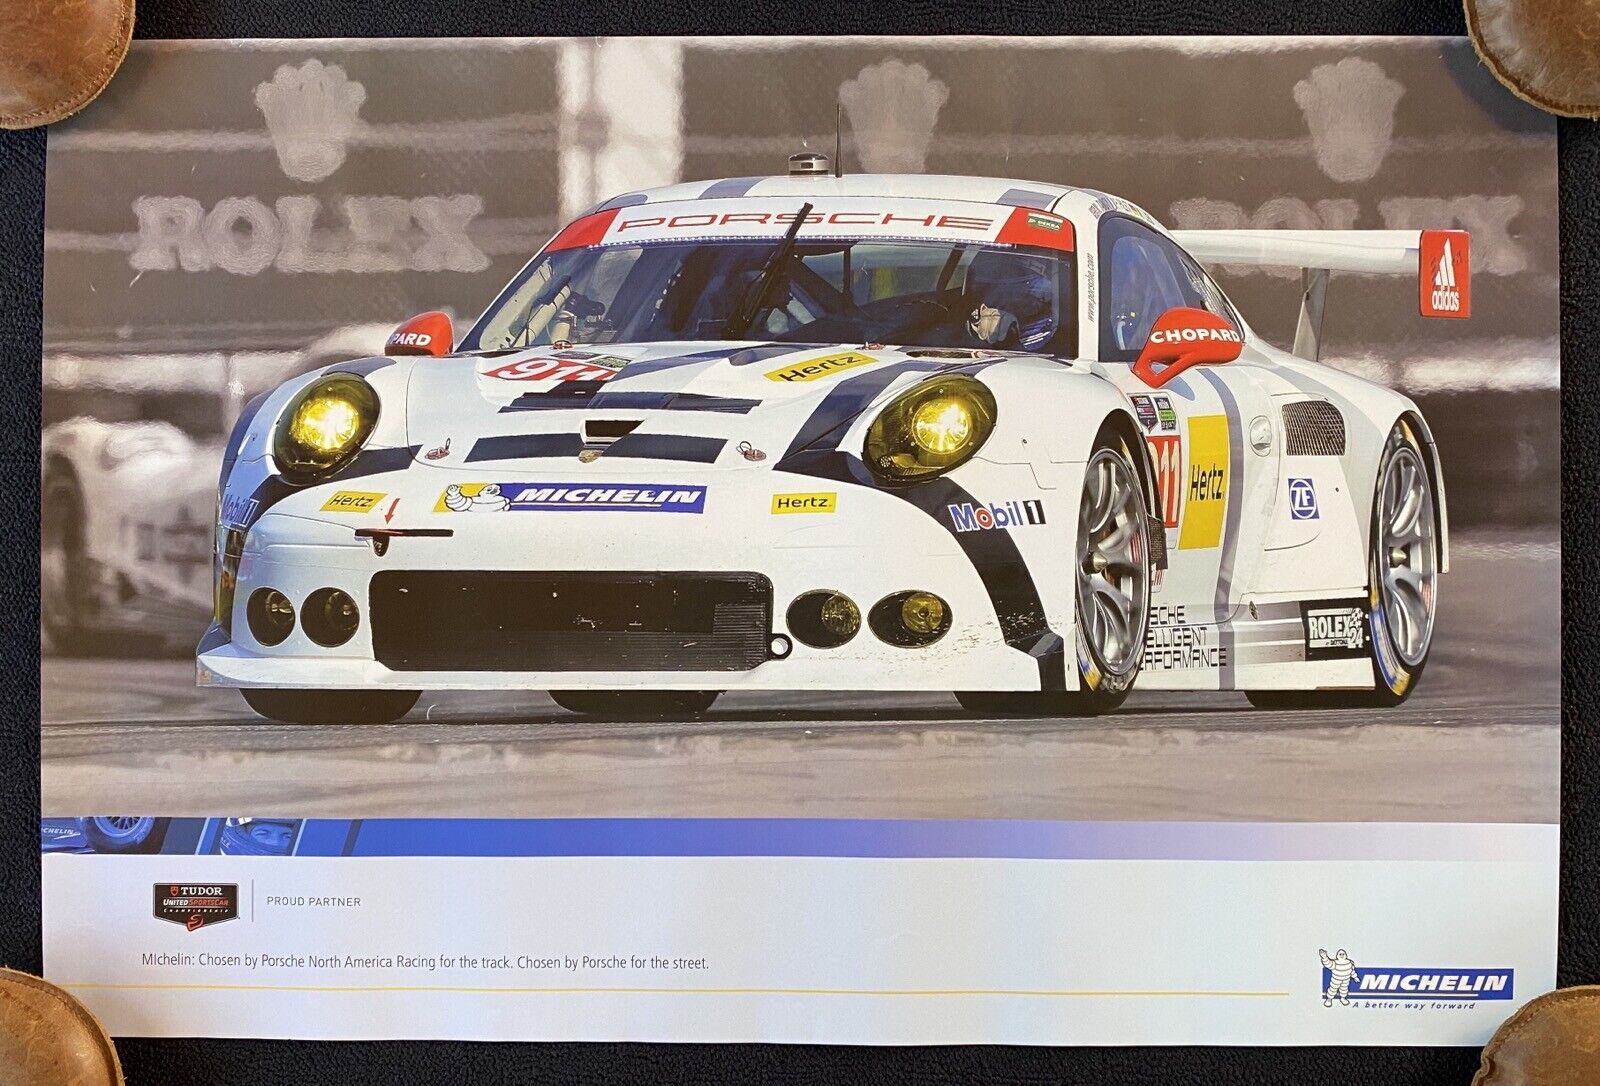 2016 Porsche North American Racing 911 RSR Michelin Tires Poster IMSA WEC GTLM